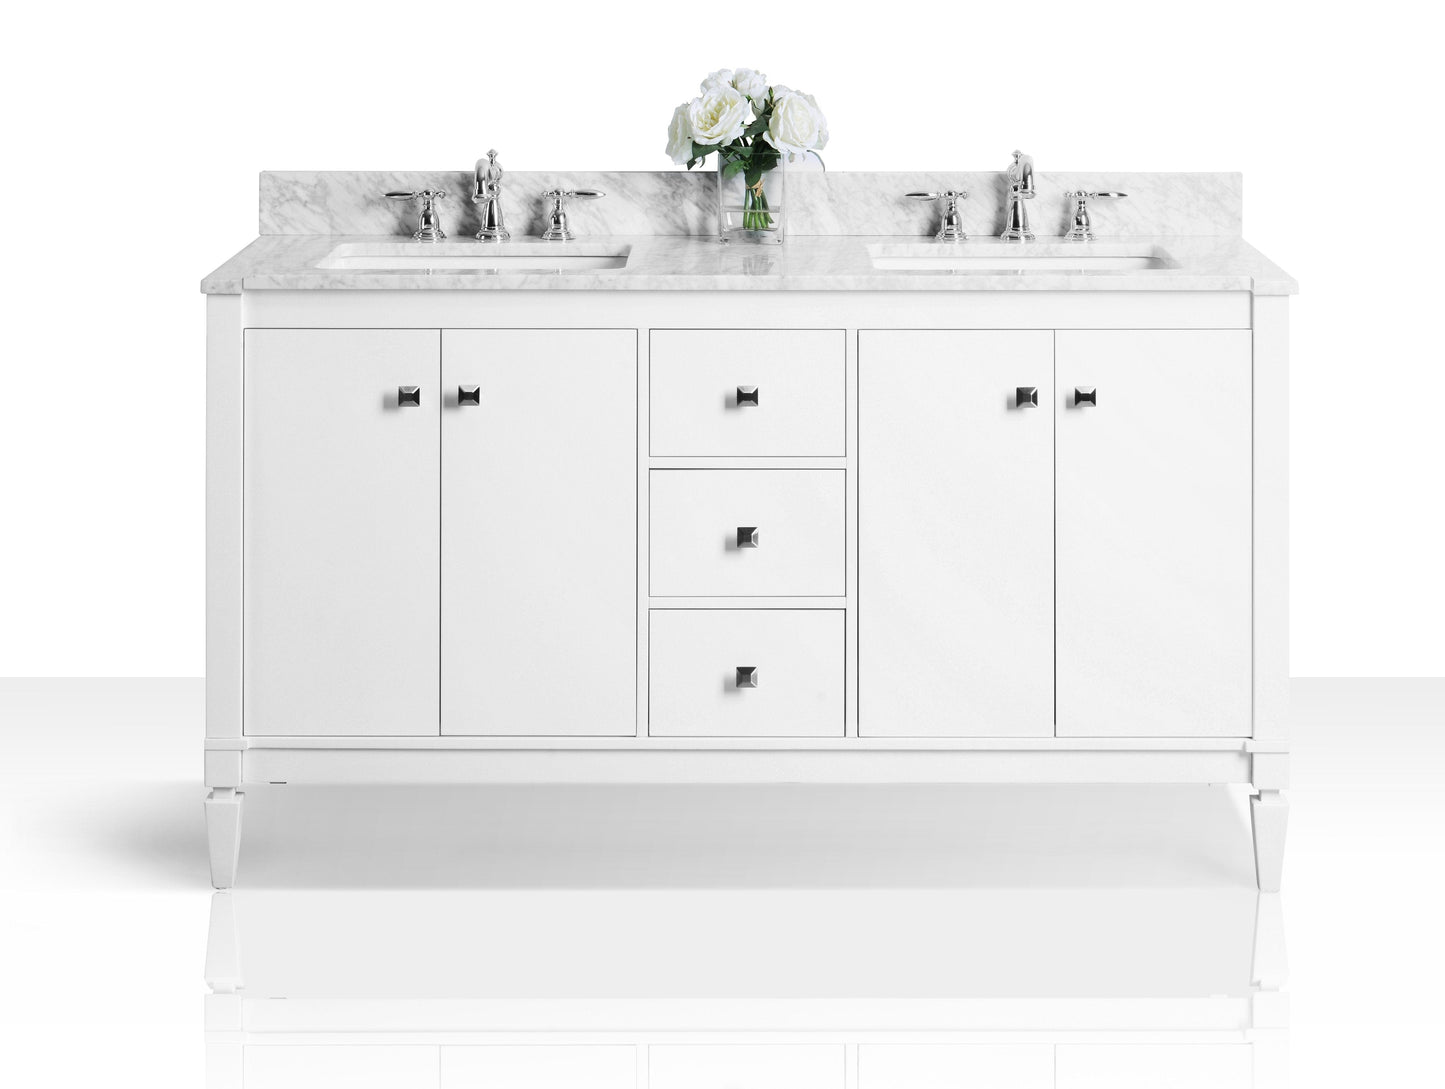 Ancerra Designs Kayleigh 60 in. Bath Vanity Set in White with 24 in. Mirror